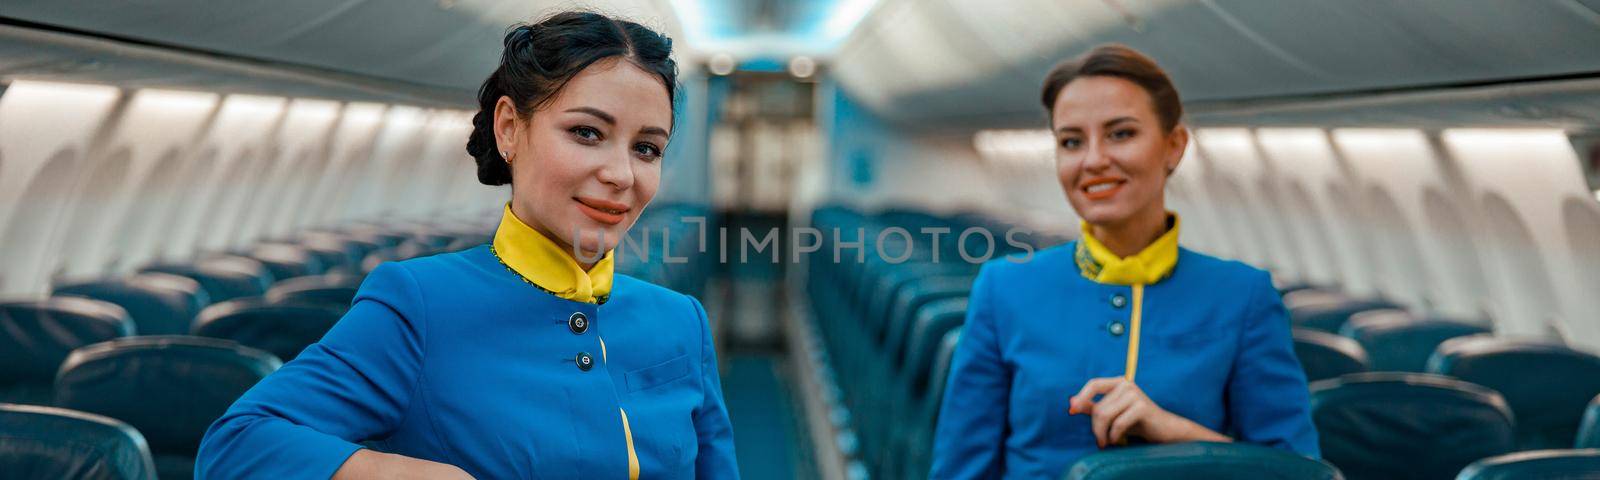 Joyful women flight attendants in air hostess uniform looking at camera and smiling while standing near passenger seats inside airplane